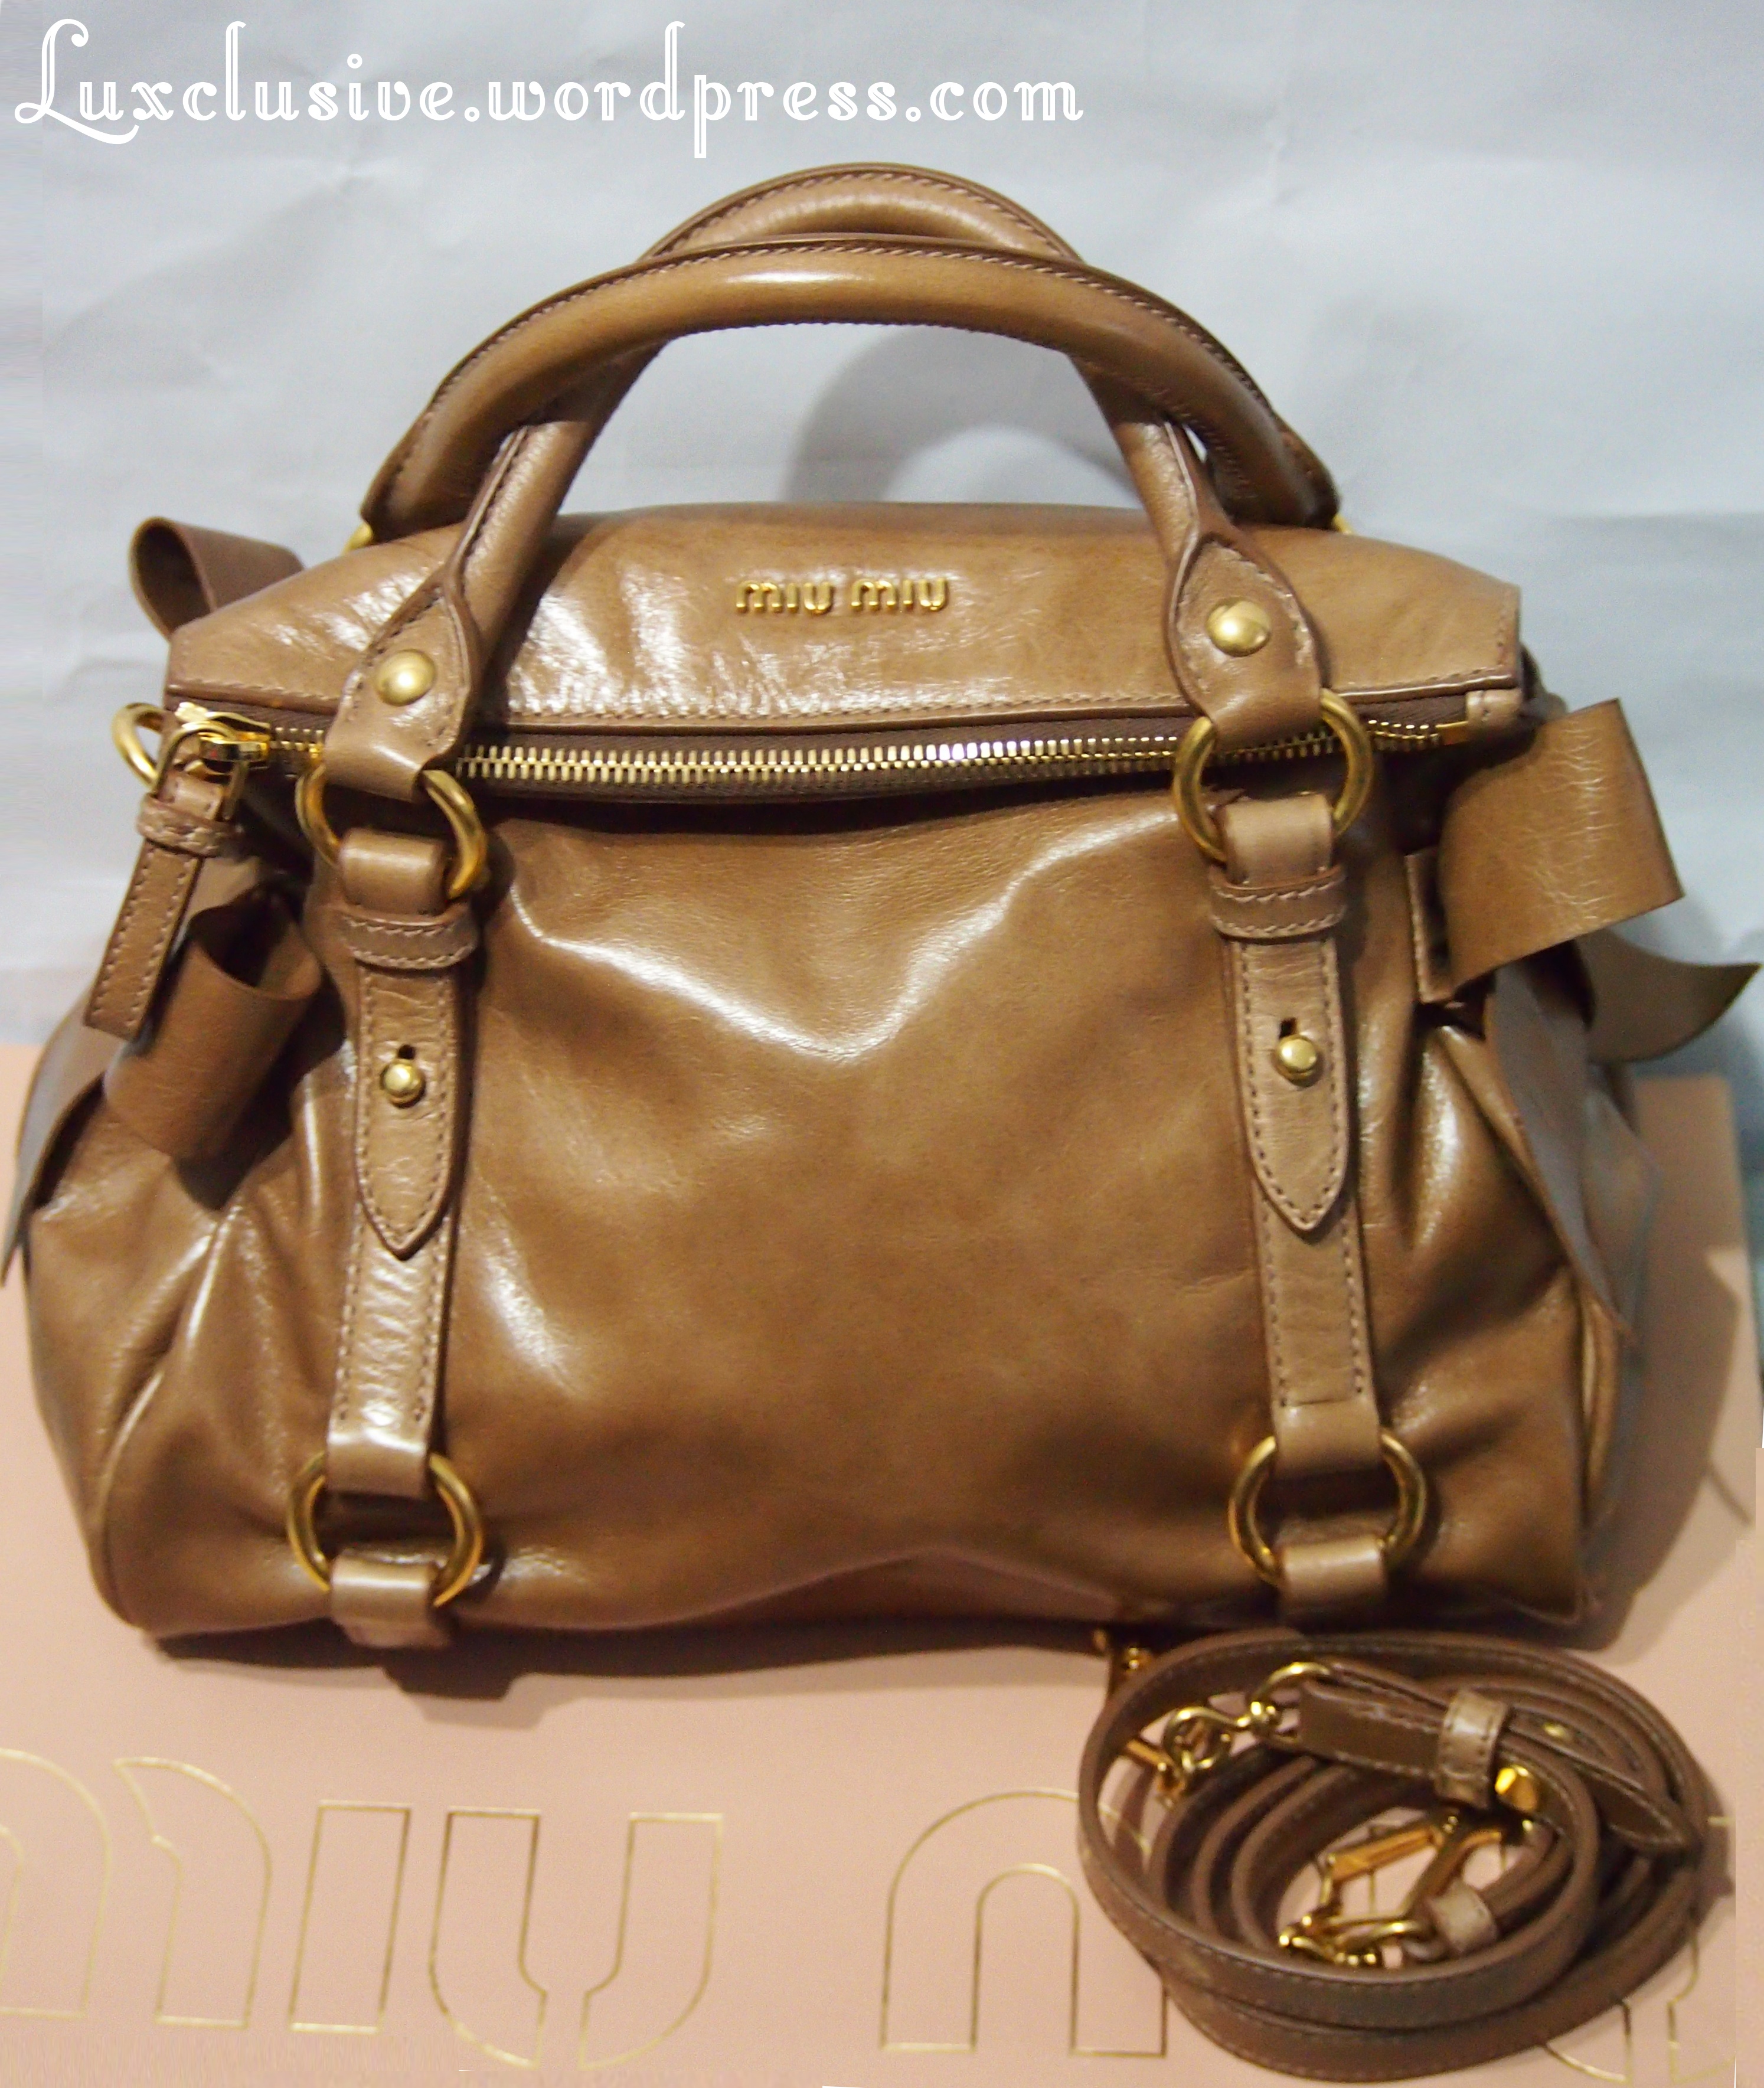 MIU MIU Vitello Lux Mini Bow Bag Cammeo 117236